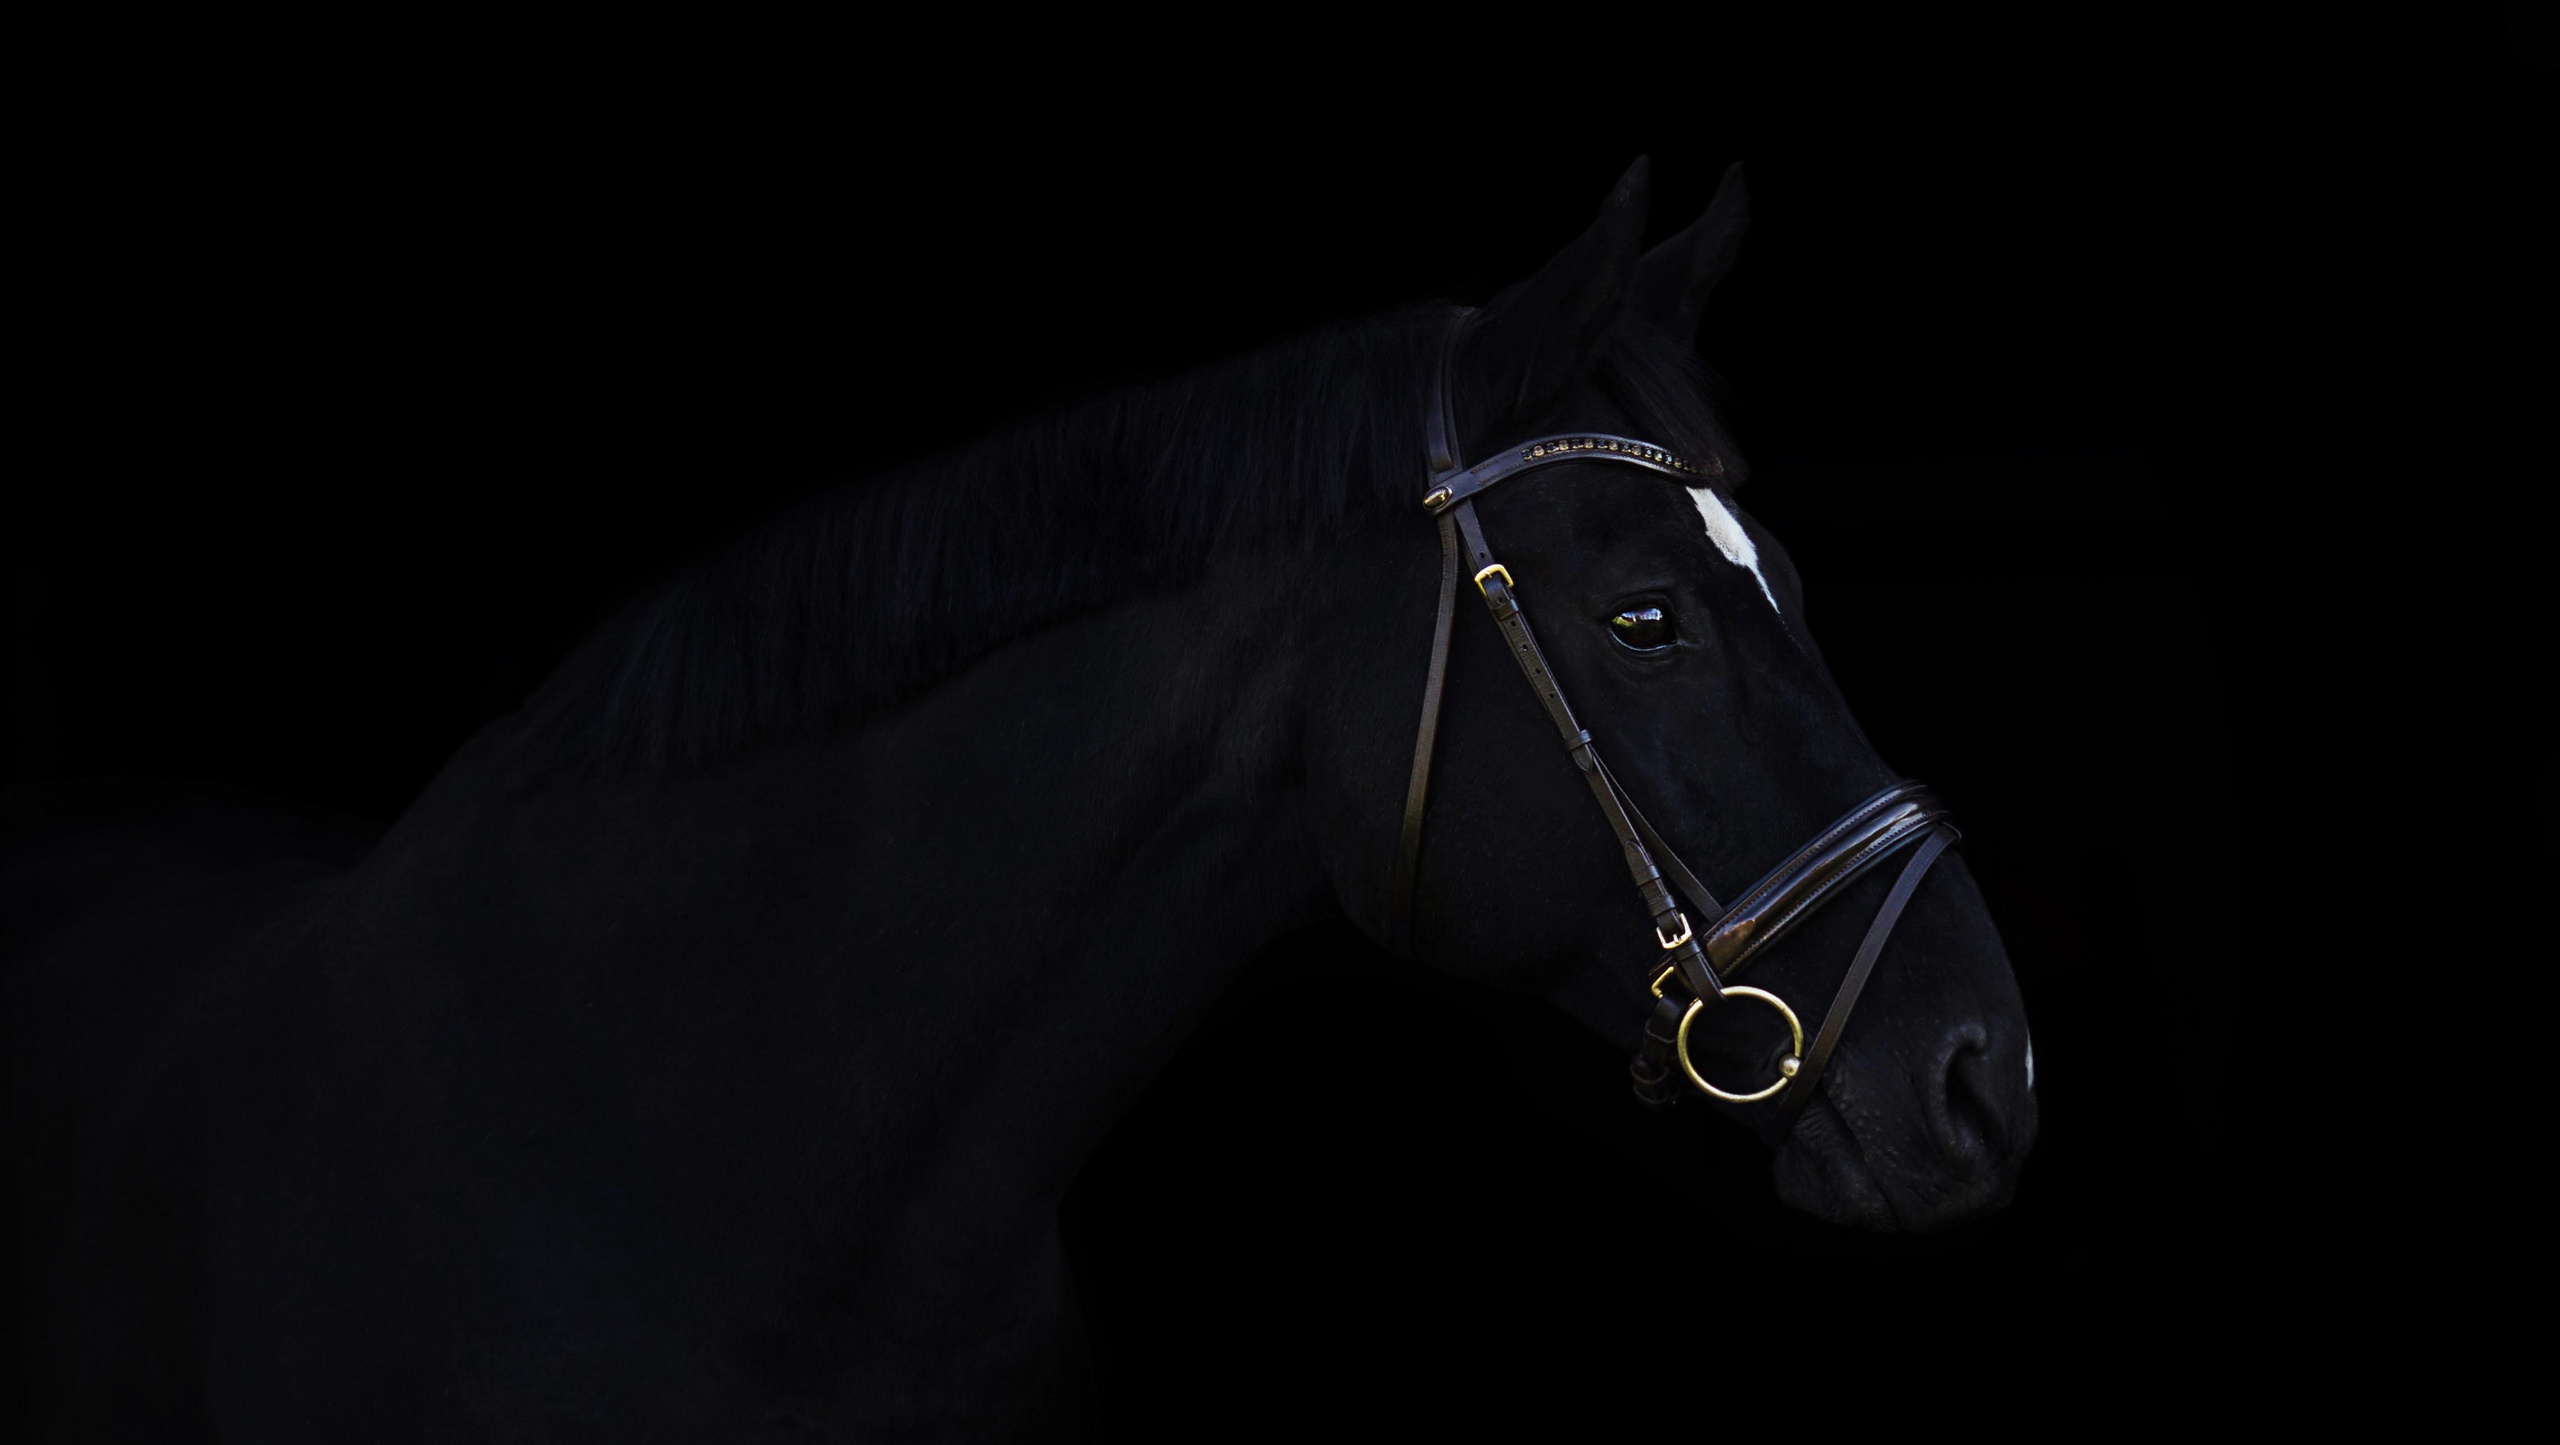 Black horse on black background